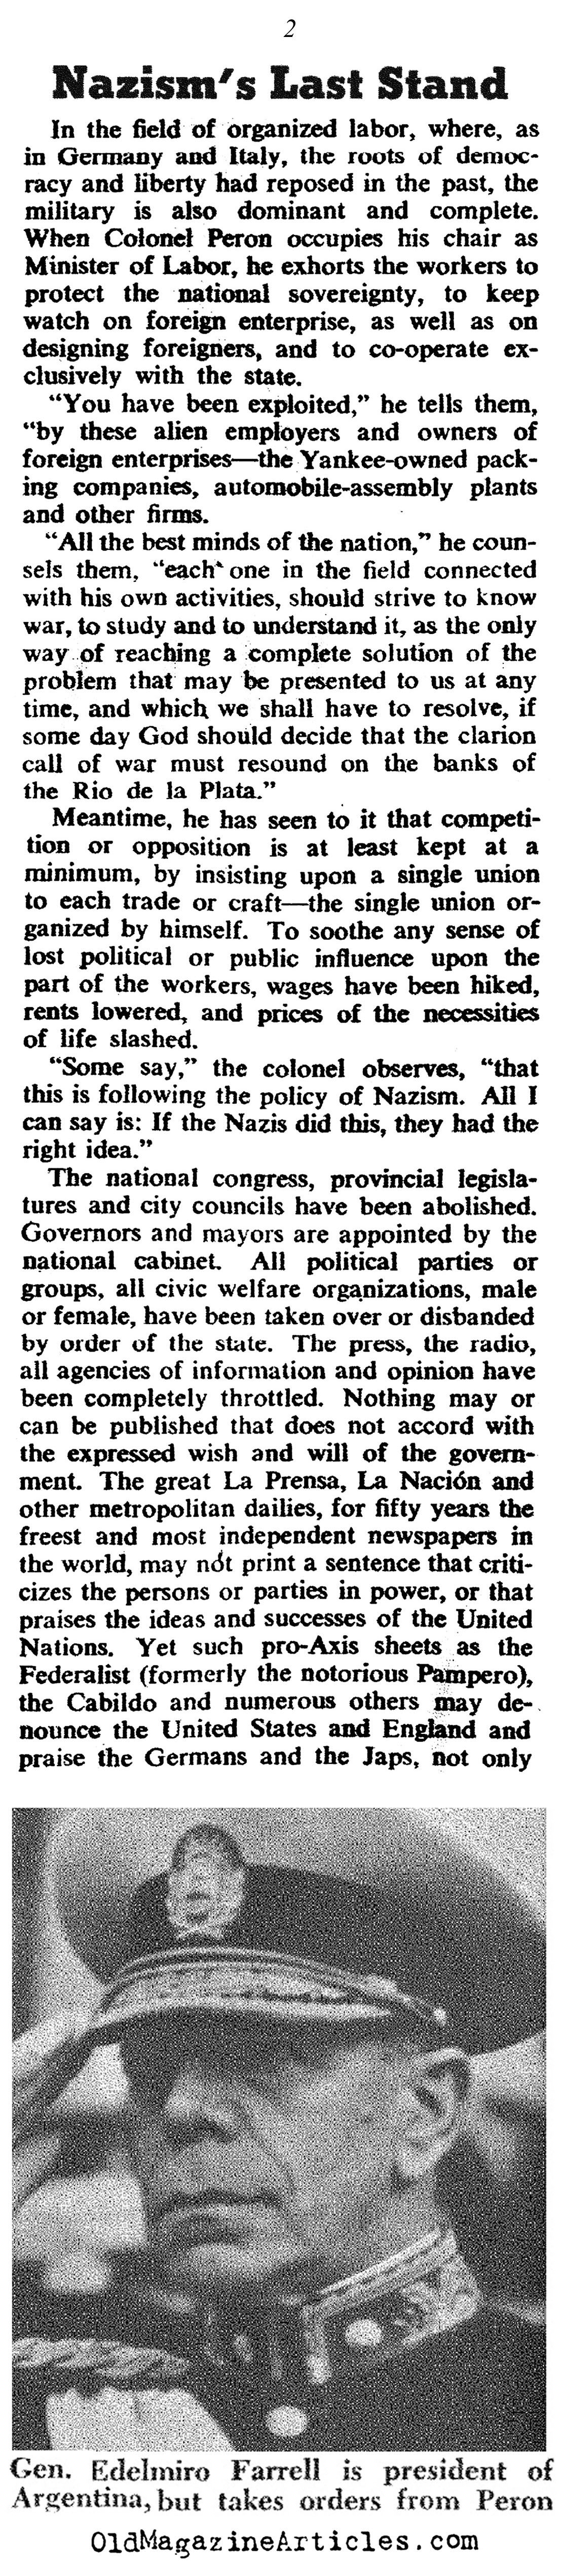 Argentina: Silent Nazi Ally (Collier's Magazine, 1944)